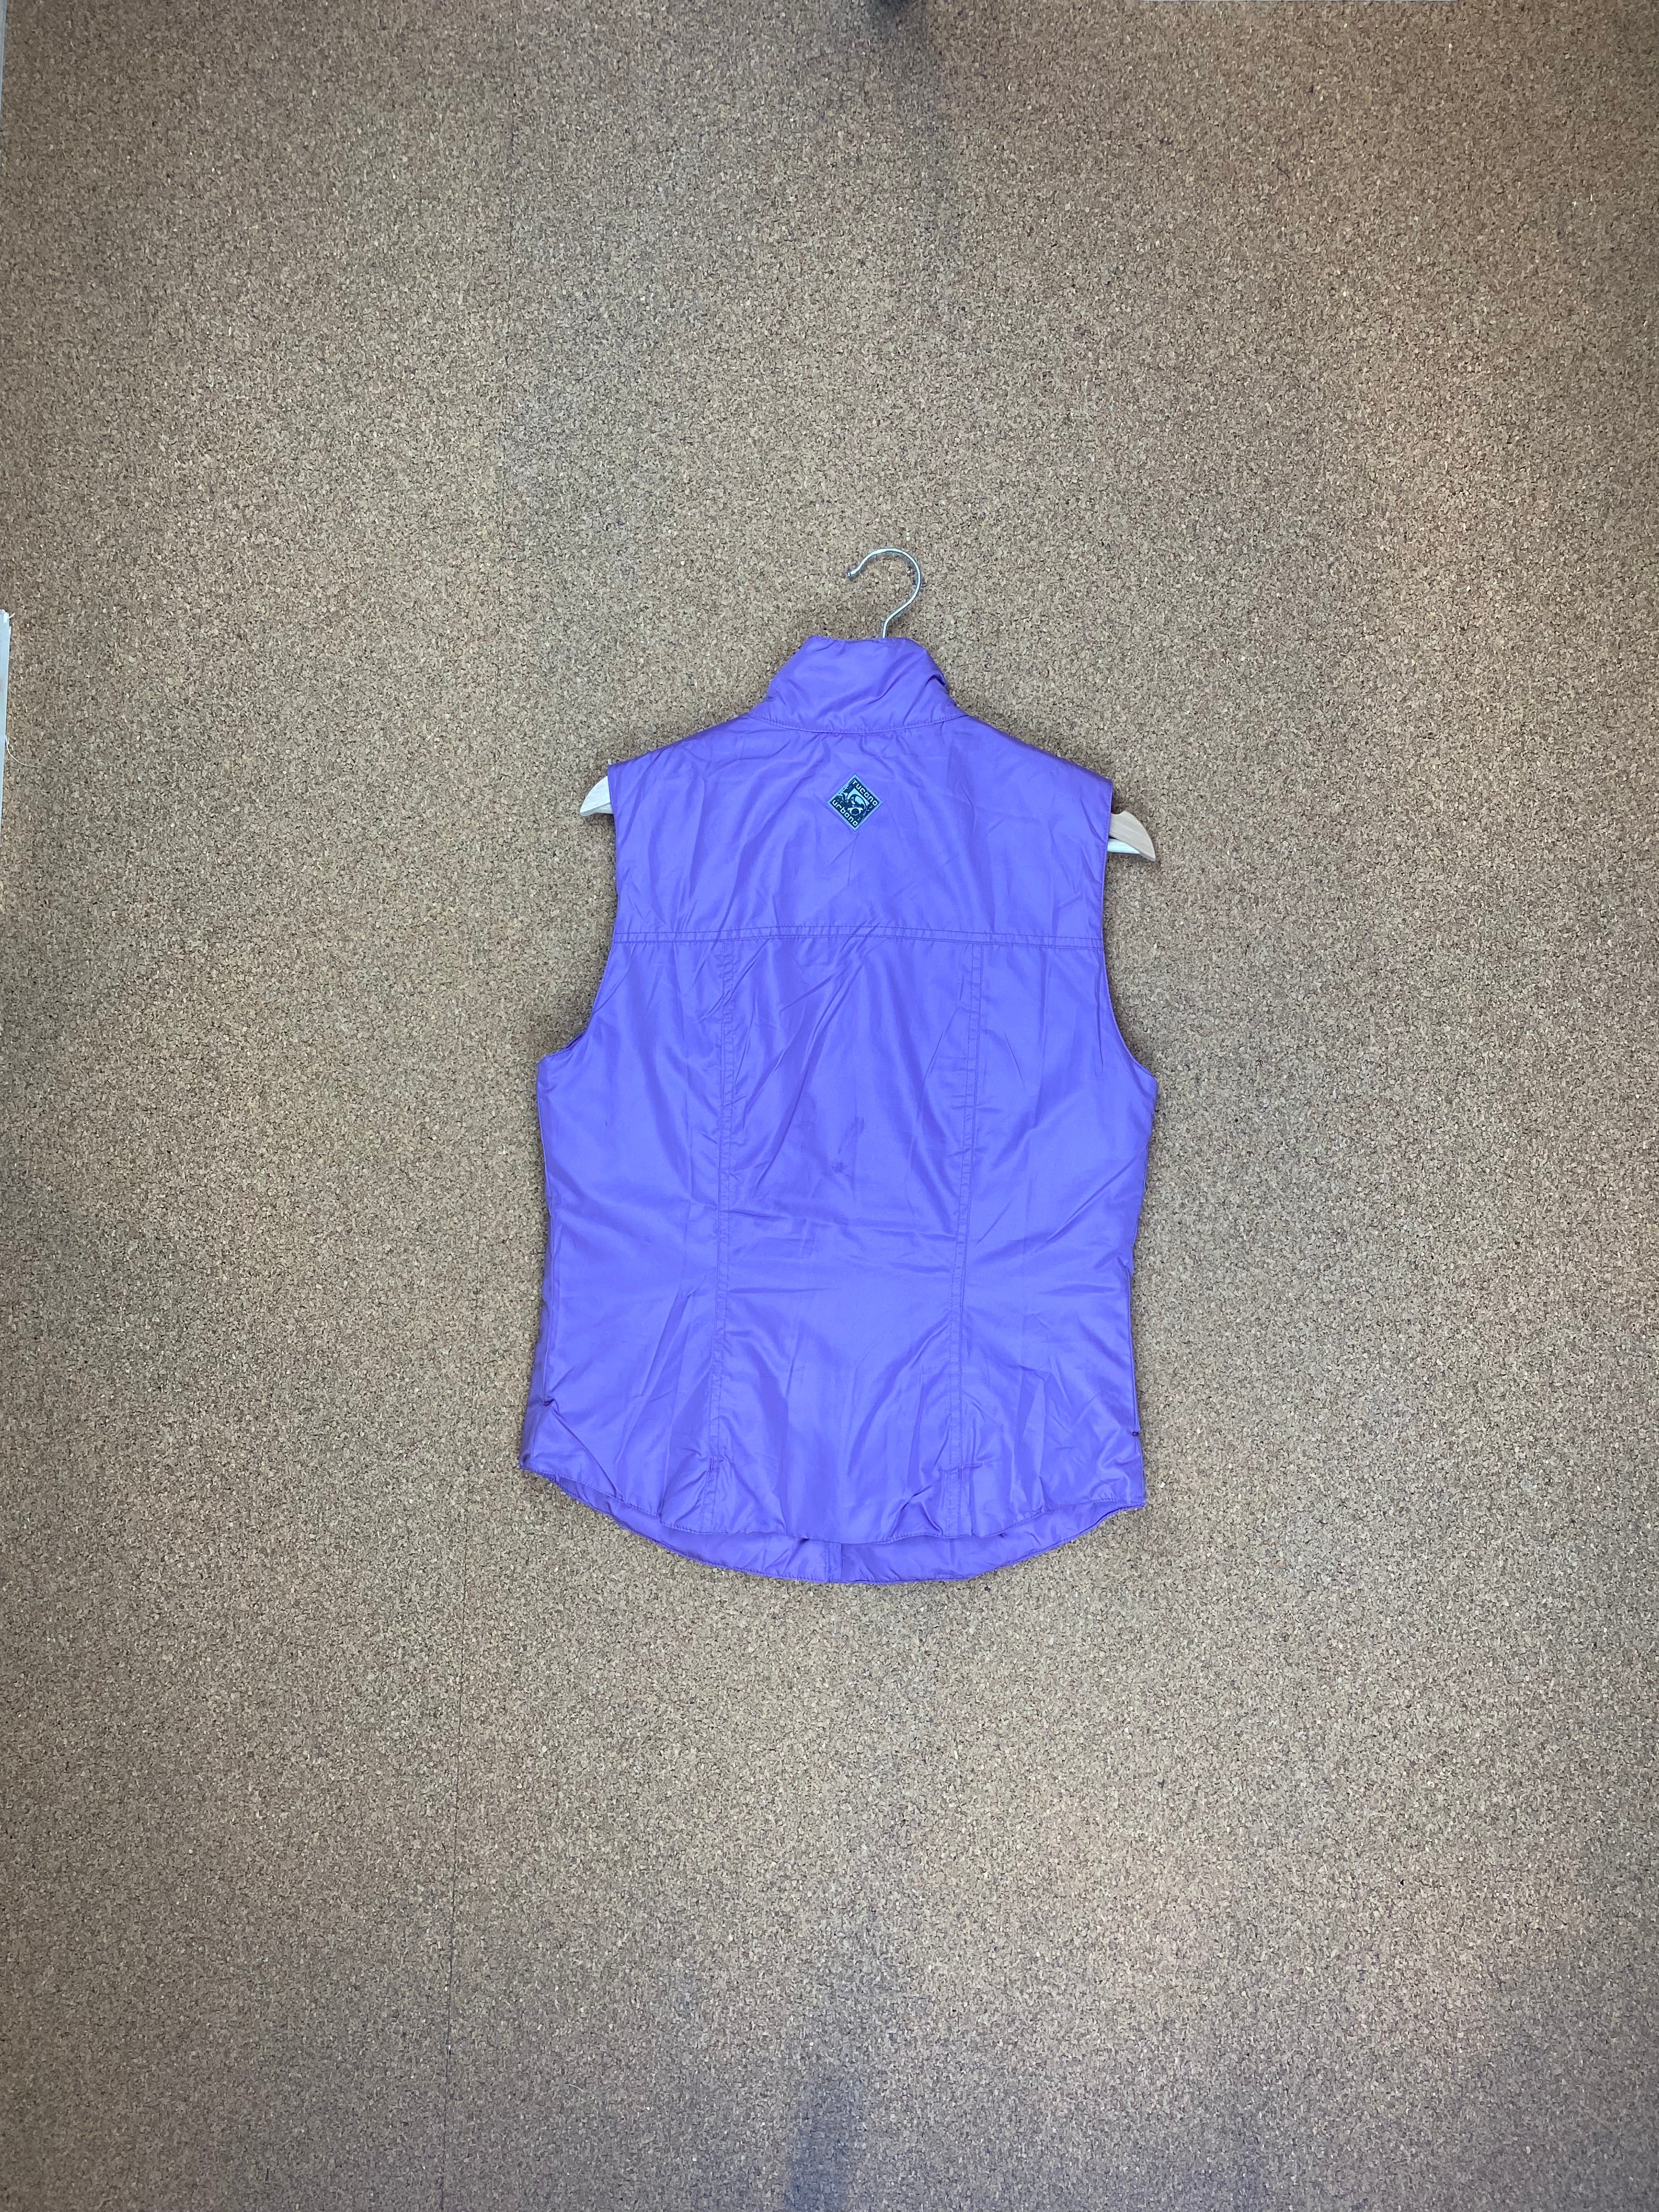 Tucanon urban Purple Puffer Vest Women's Size M